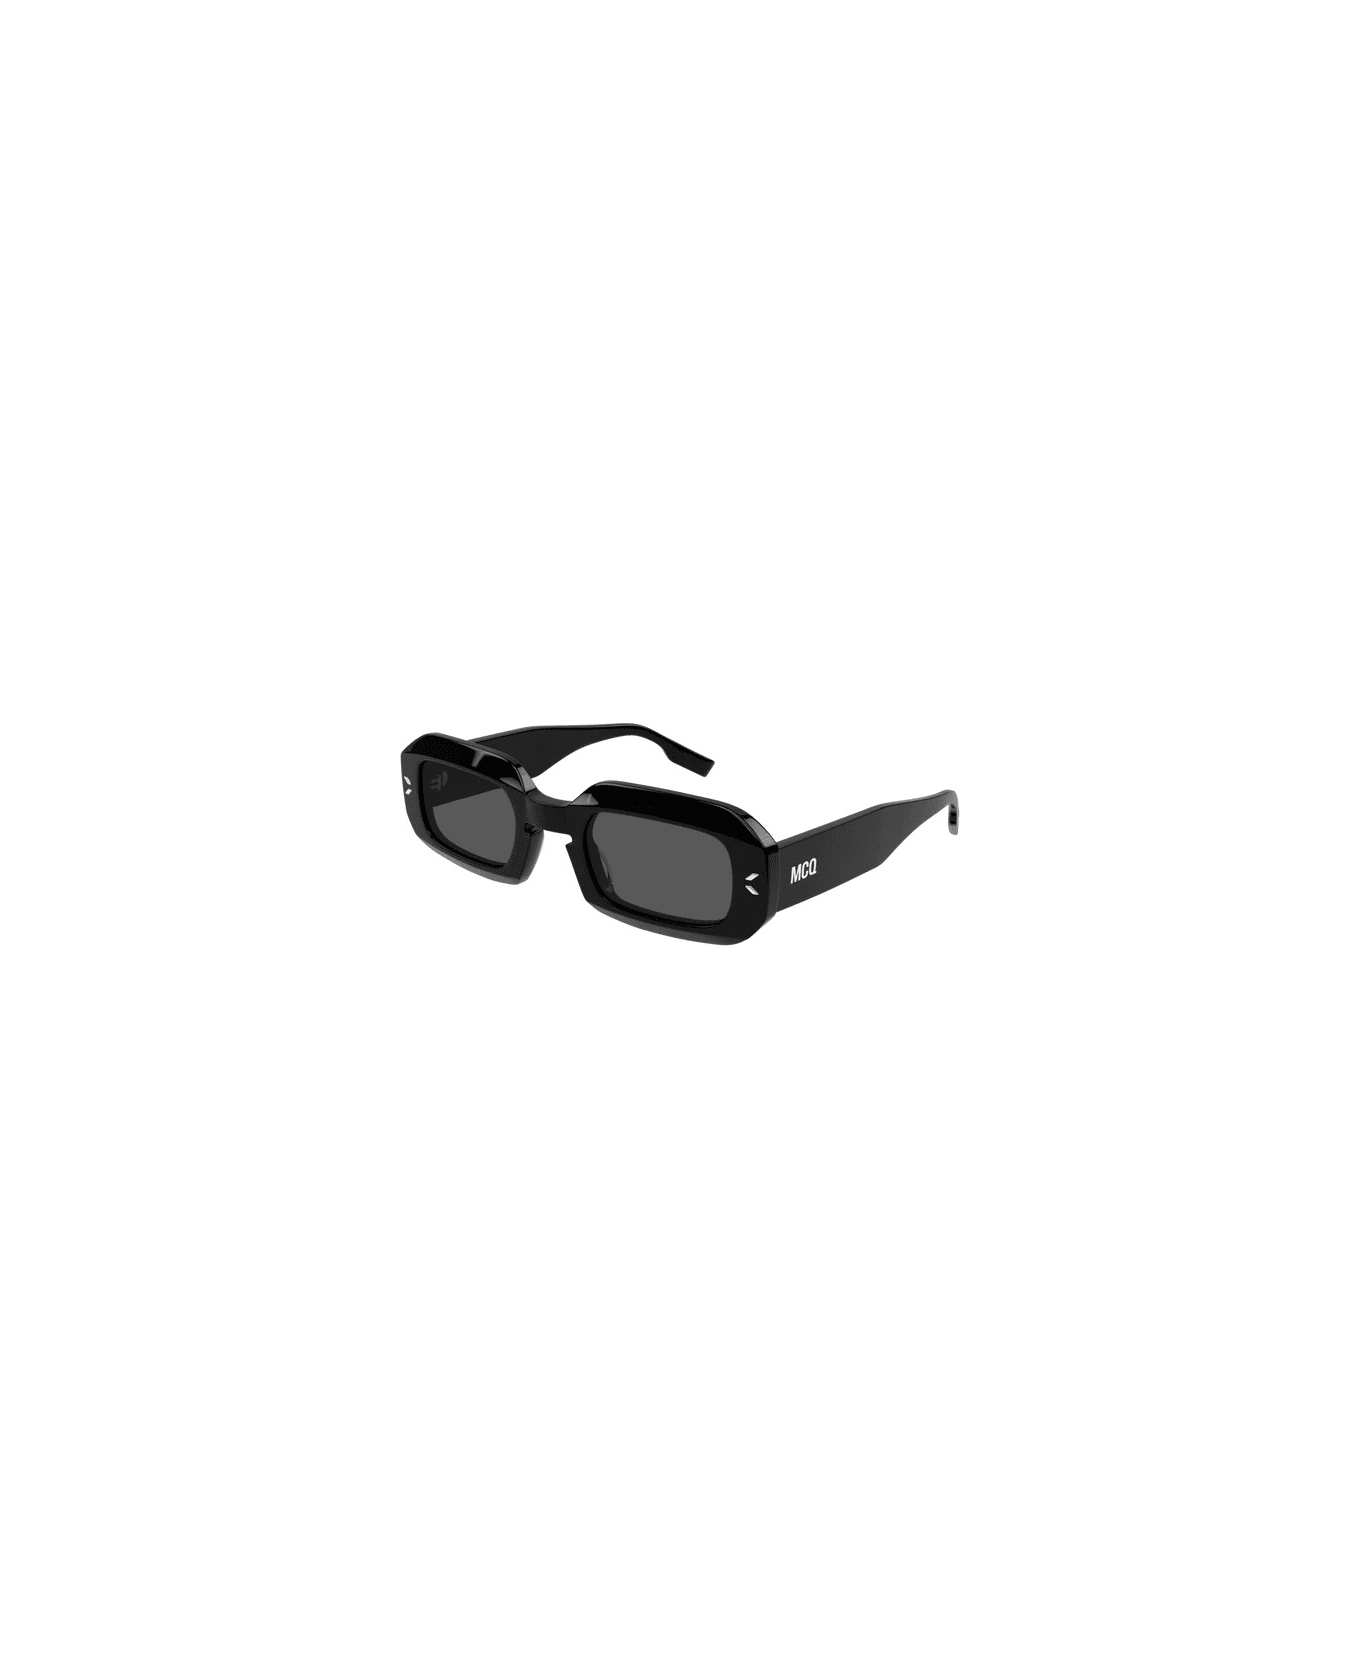 McQ Alexander McQueen MQ361s 001 Sunglasses サングラス